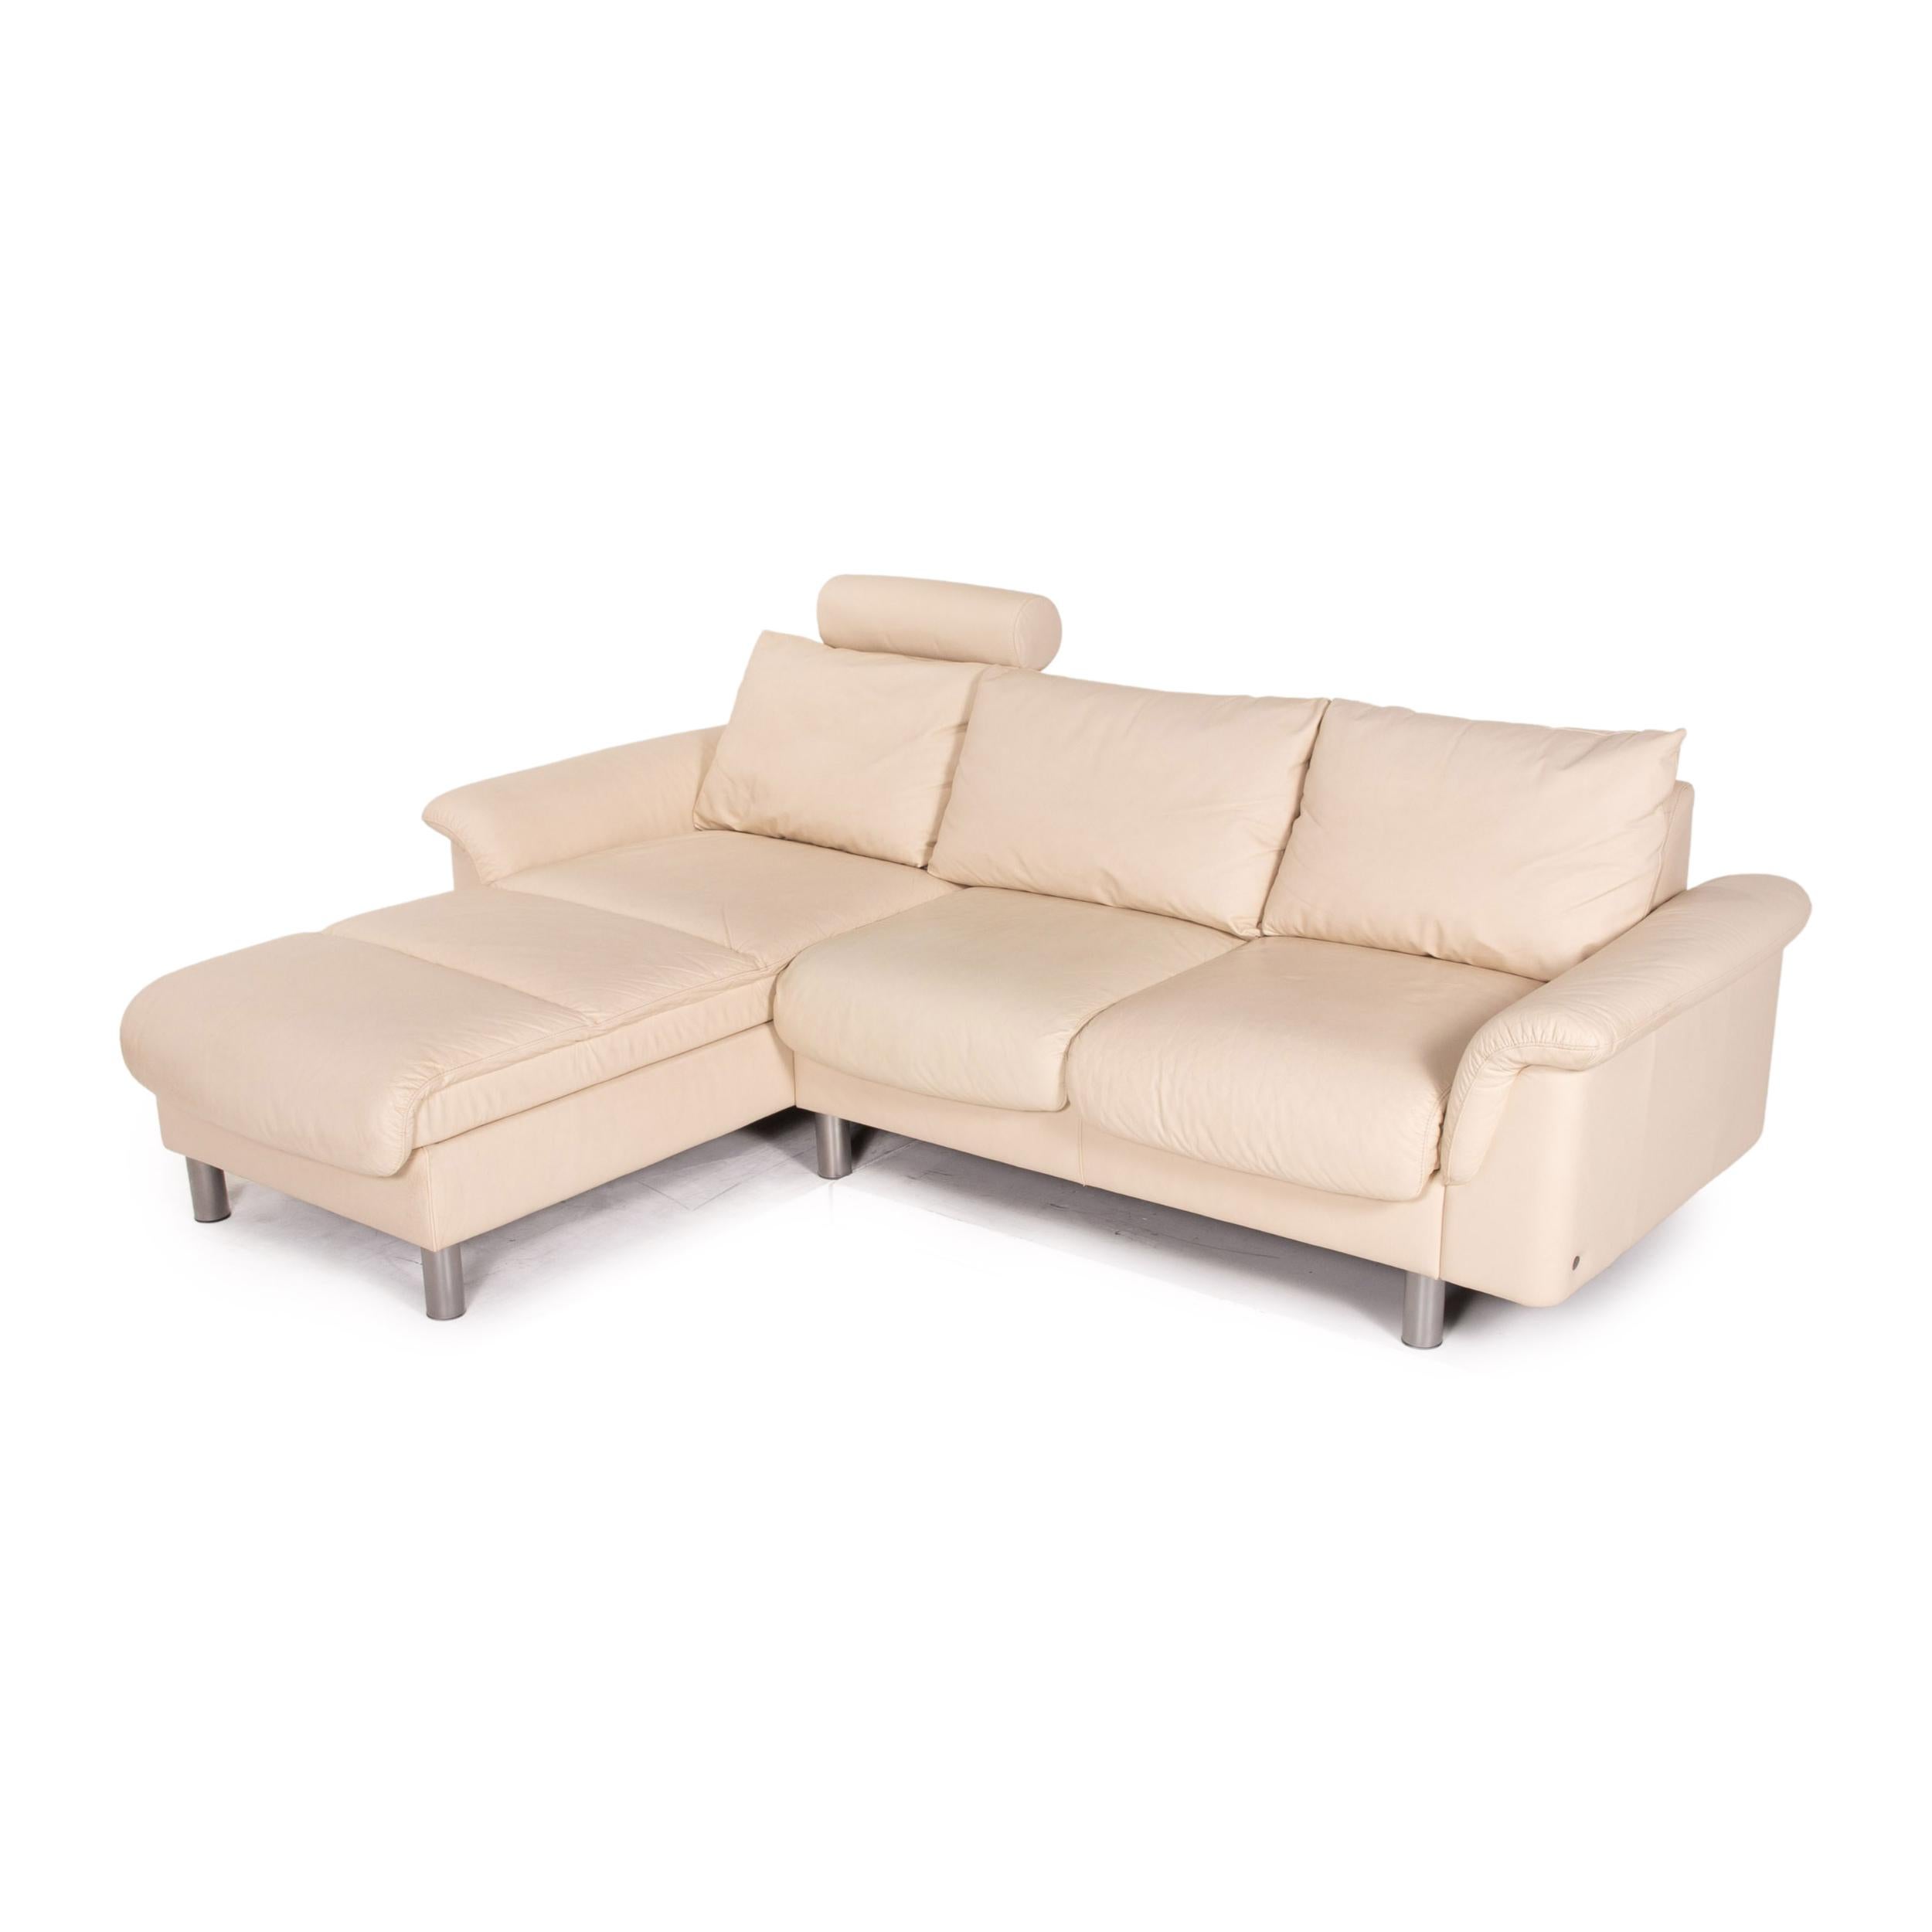 Contemporary Stressless E300 Leather Corner Sofa Cream Sofa Function Couch